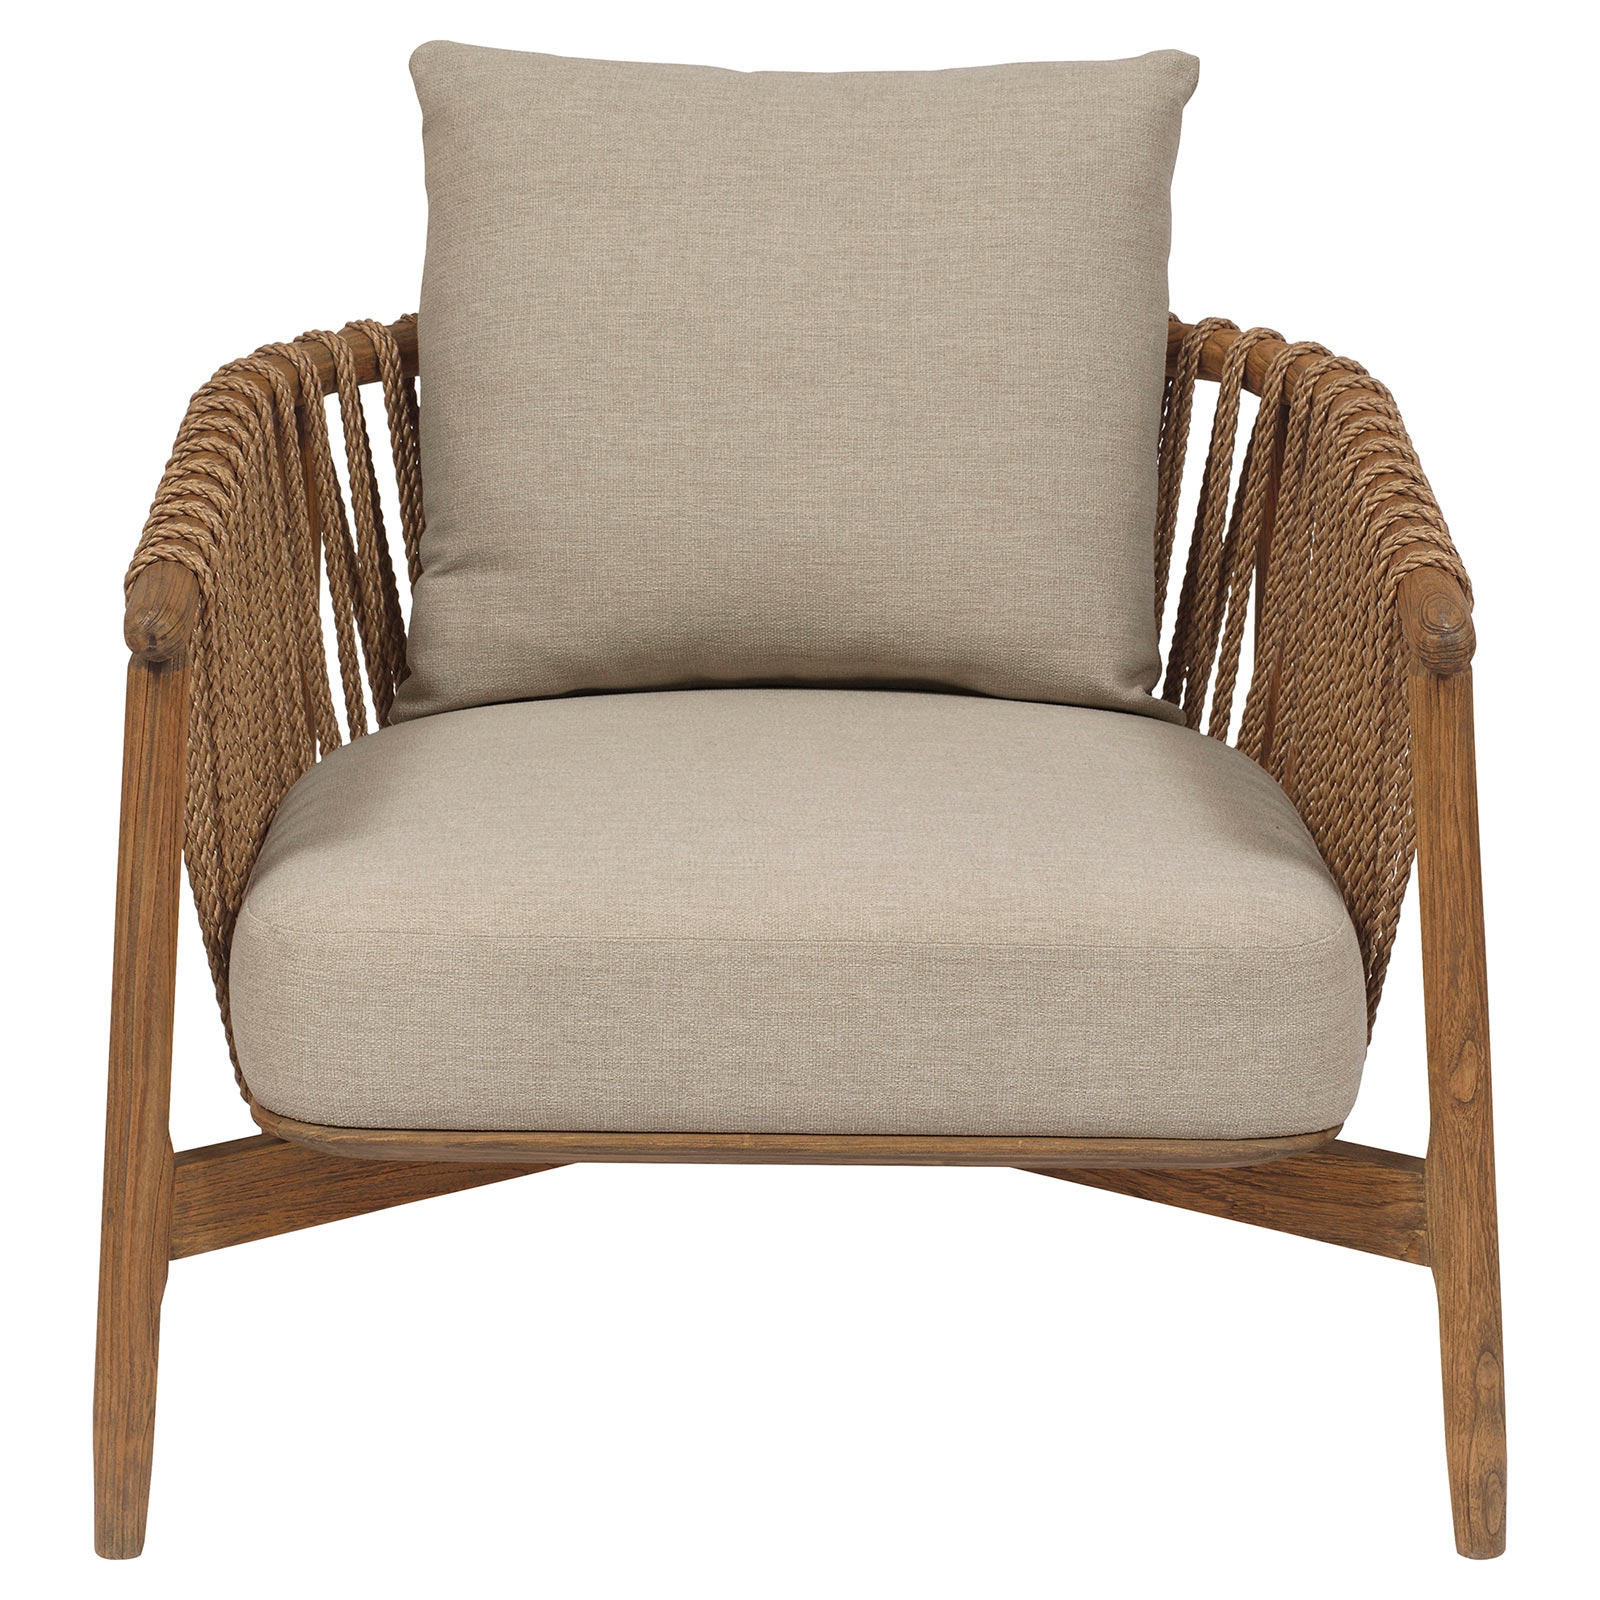 Taelyn Rustic Lodge Sand Cushion Teak Living Room Armchair - Image 1